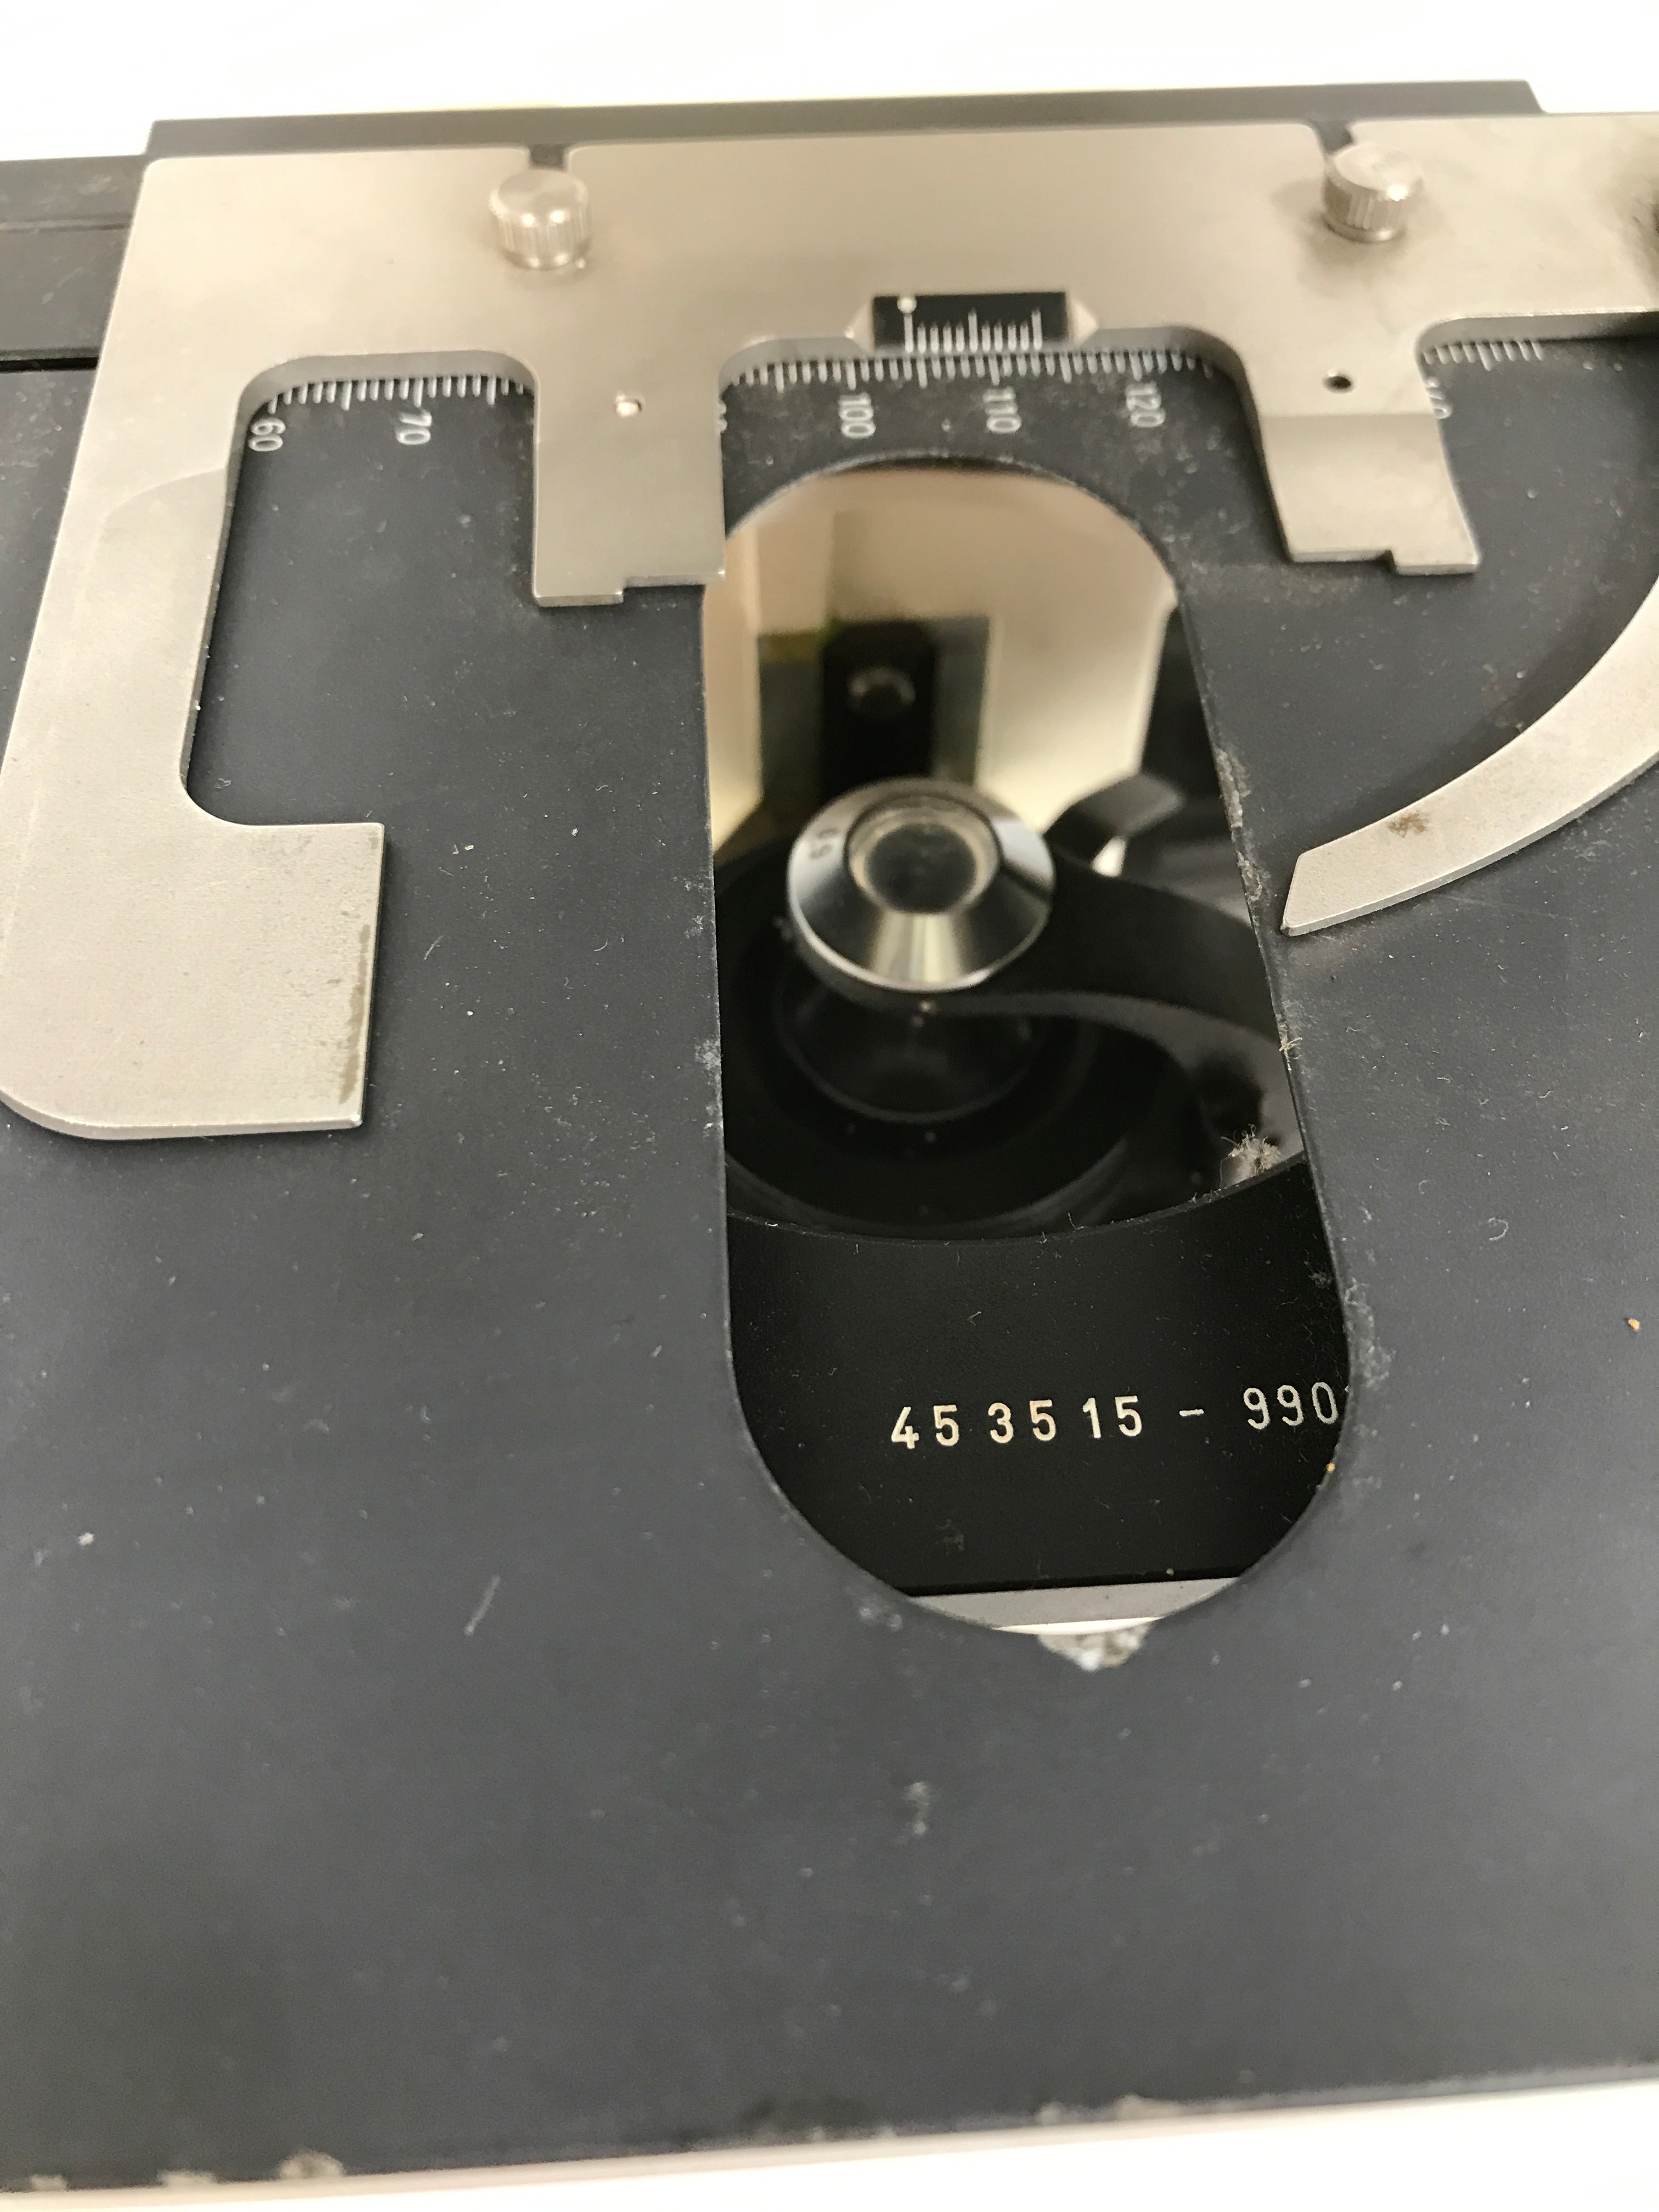 Zeiss Standard 25 Binocular Microscope *For Parts or Repair*